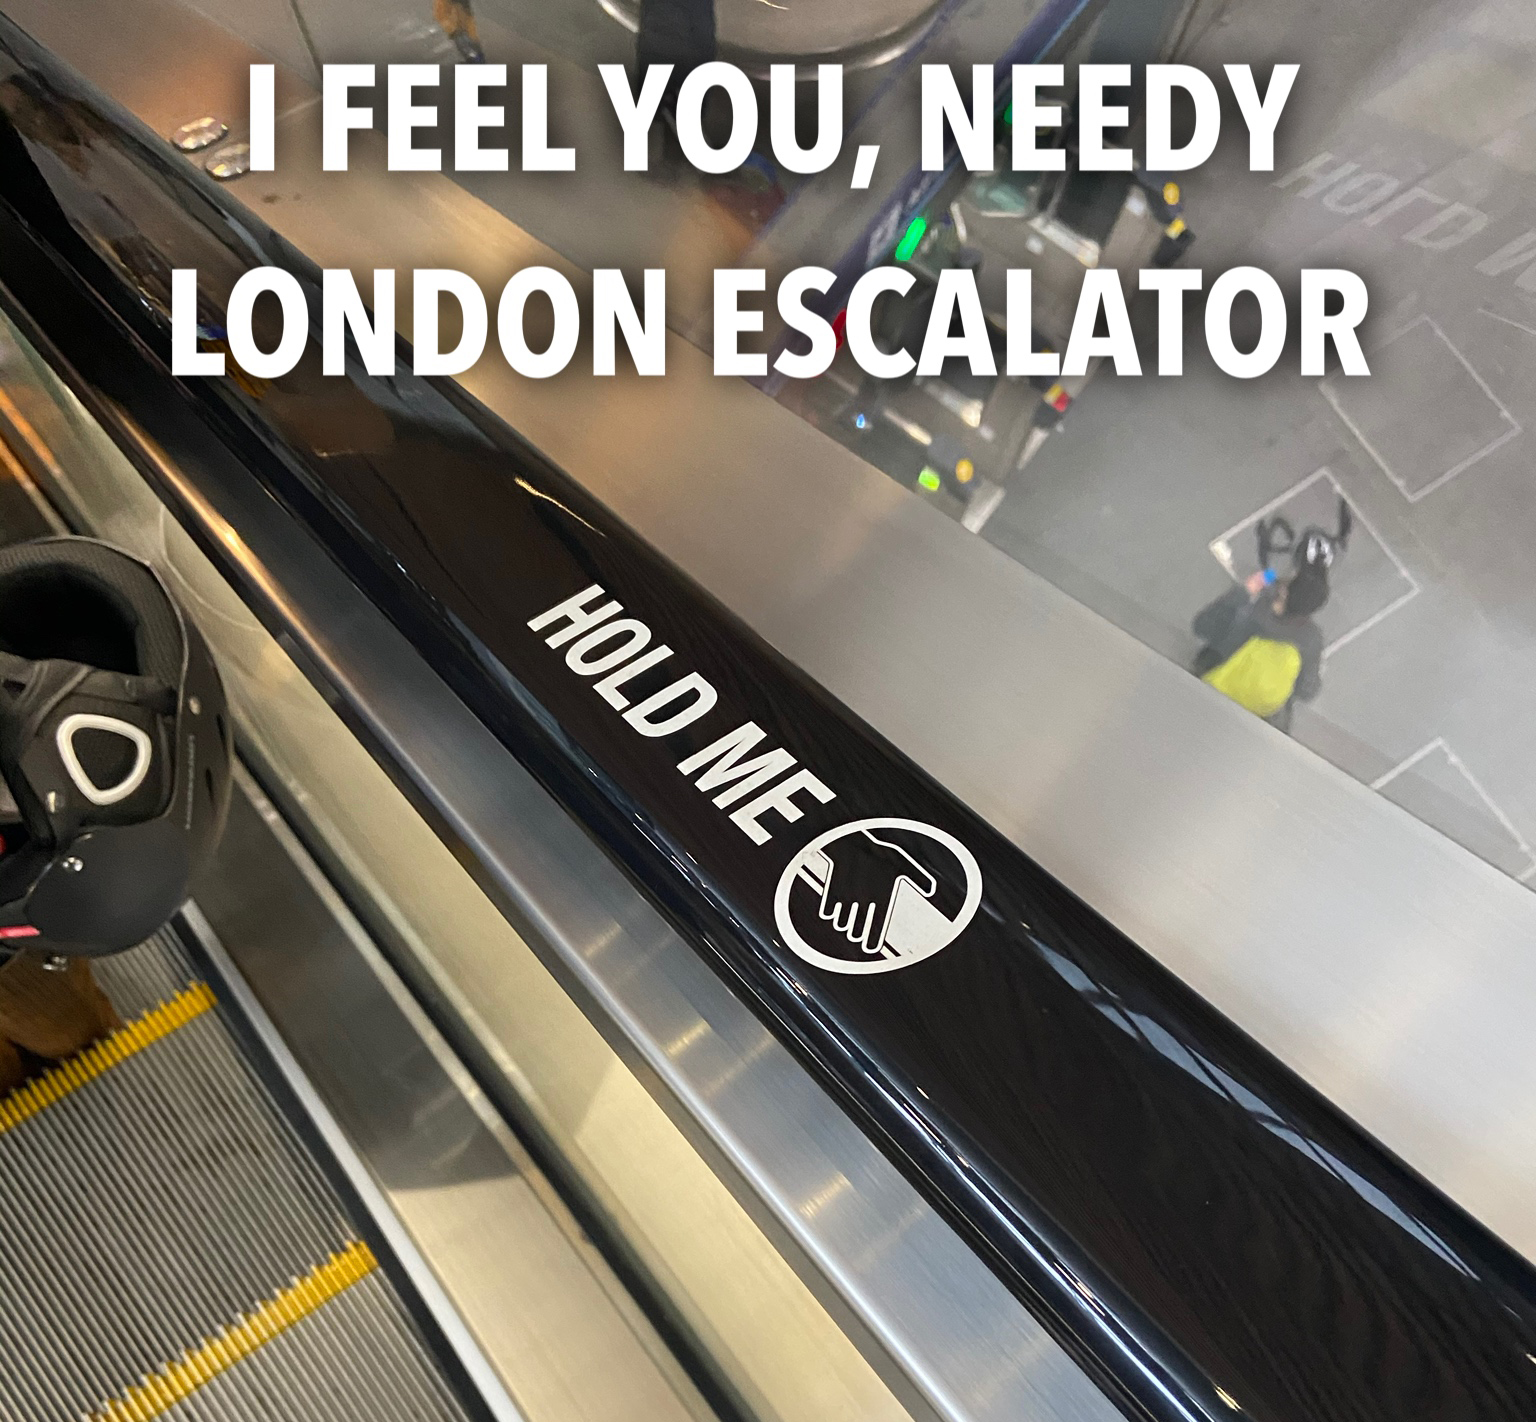 anatomia palpatoria - I Feel You, Needy London Escalator Hold Med o